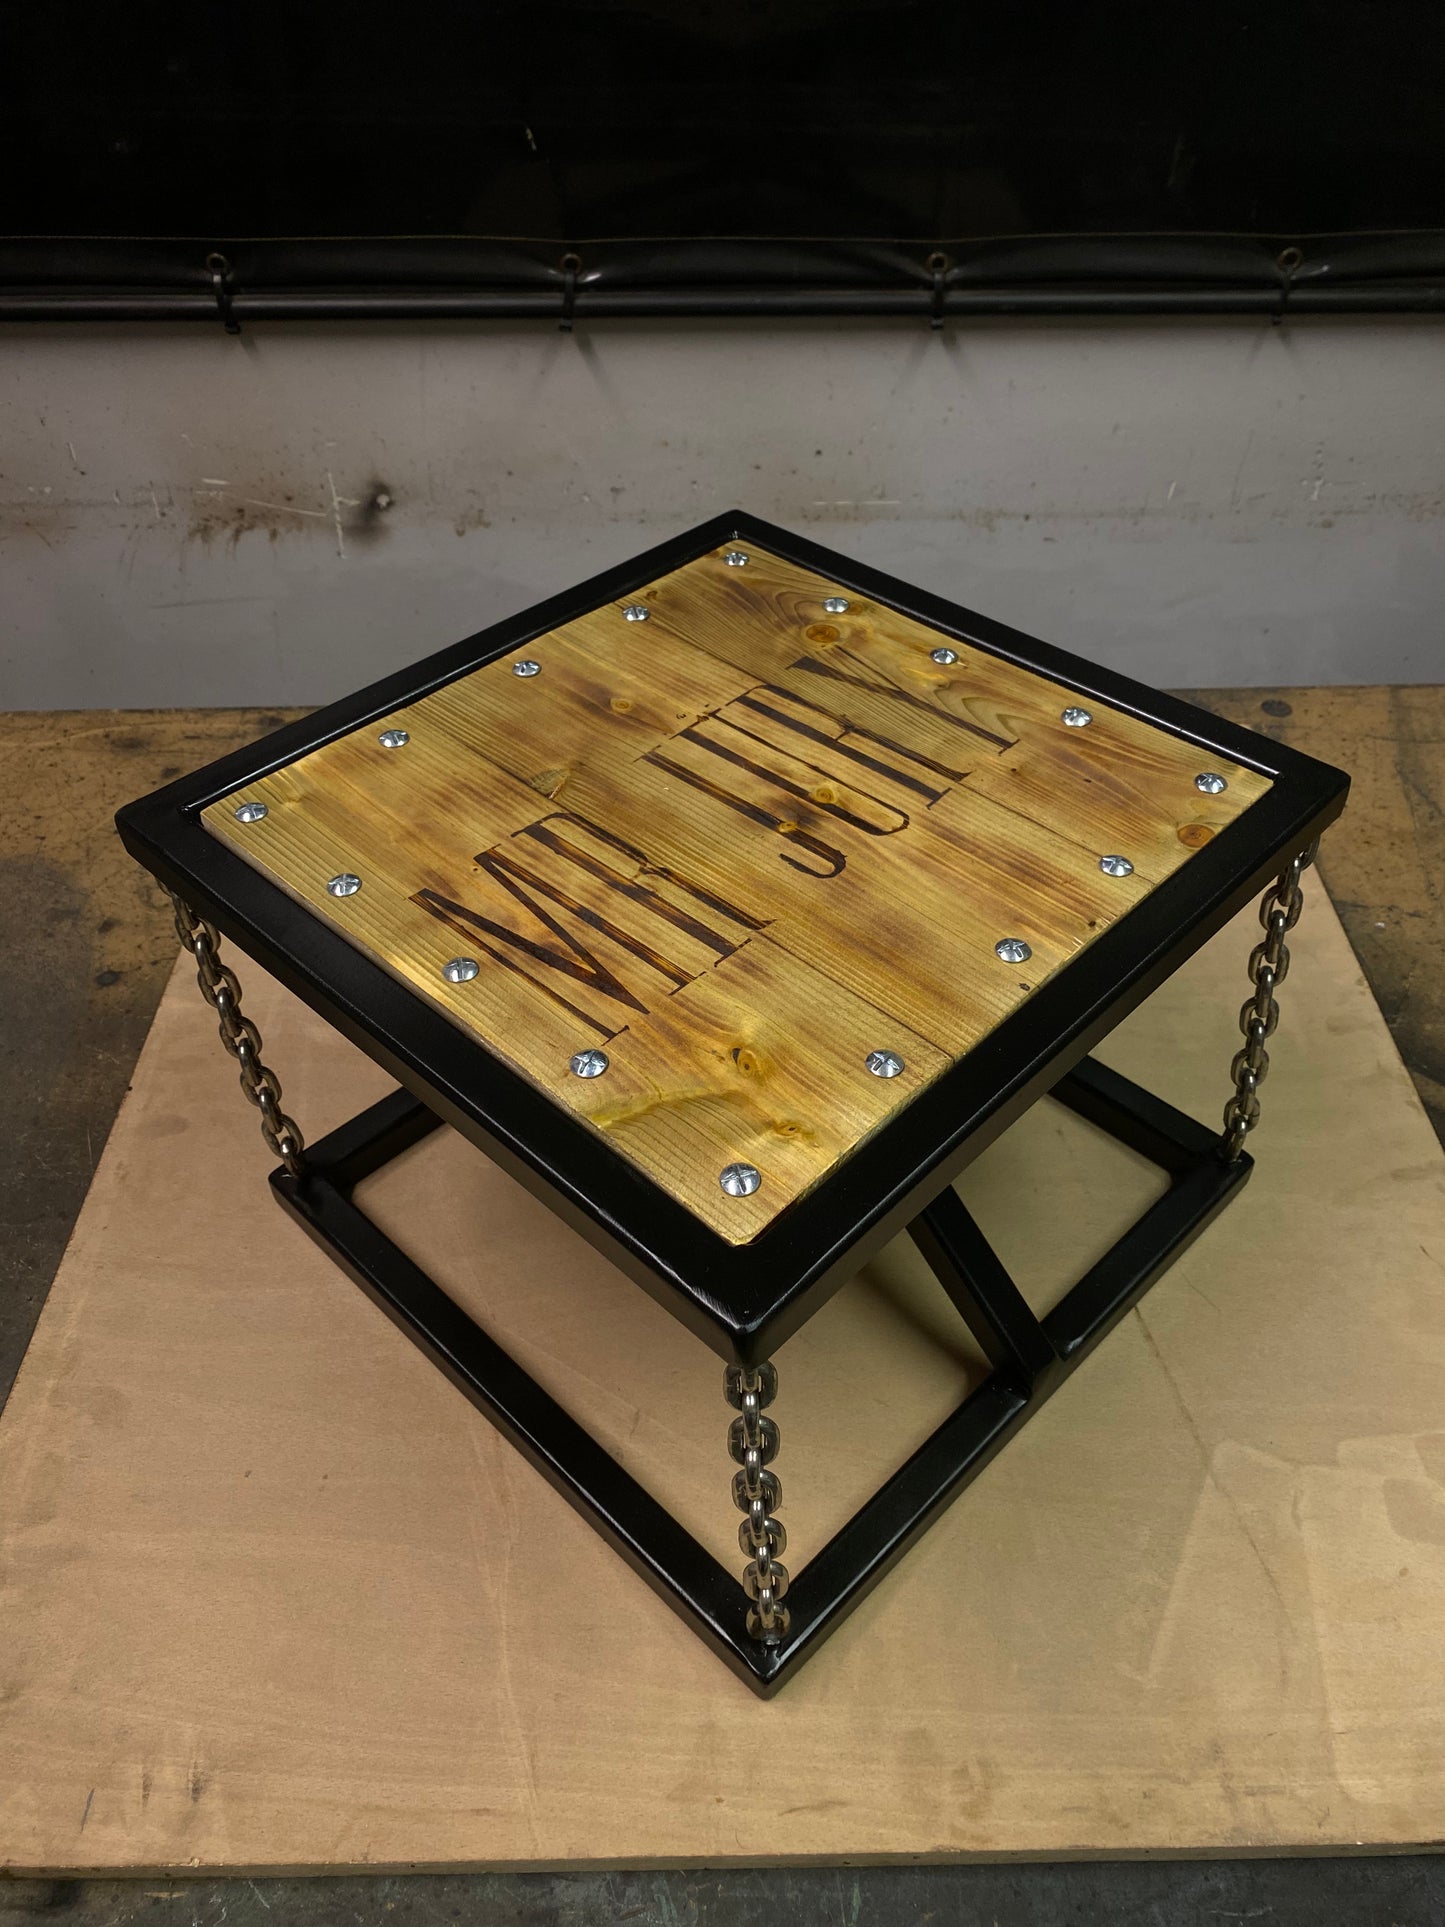 Burnt Design Table